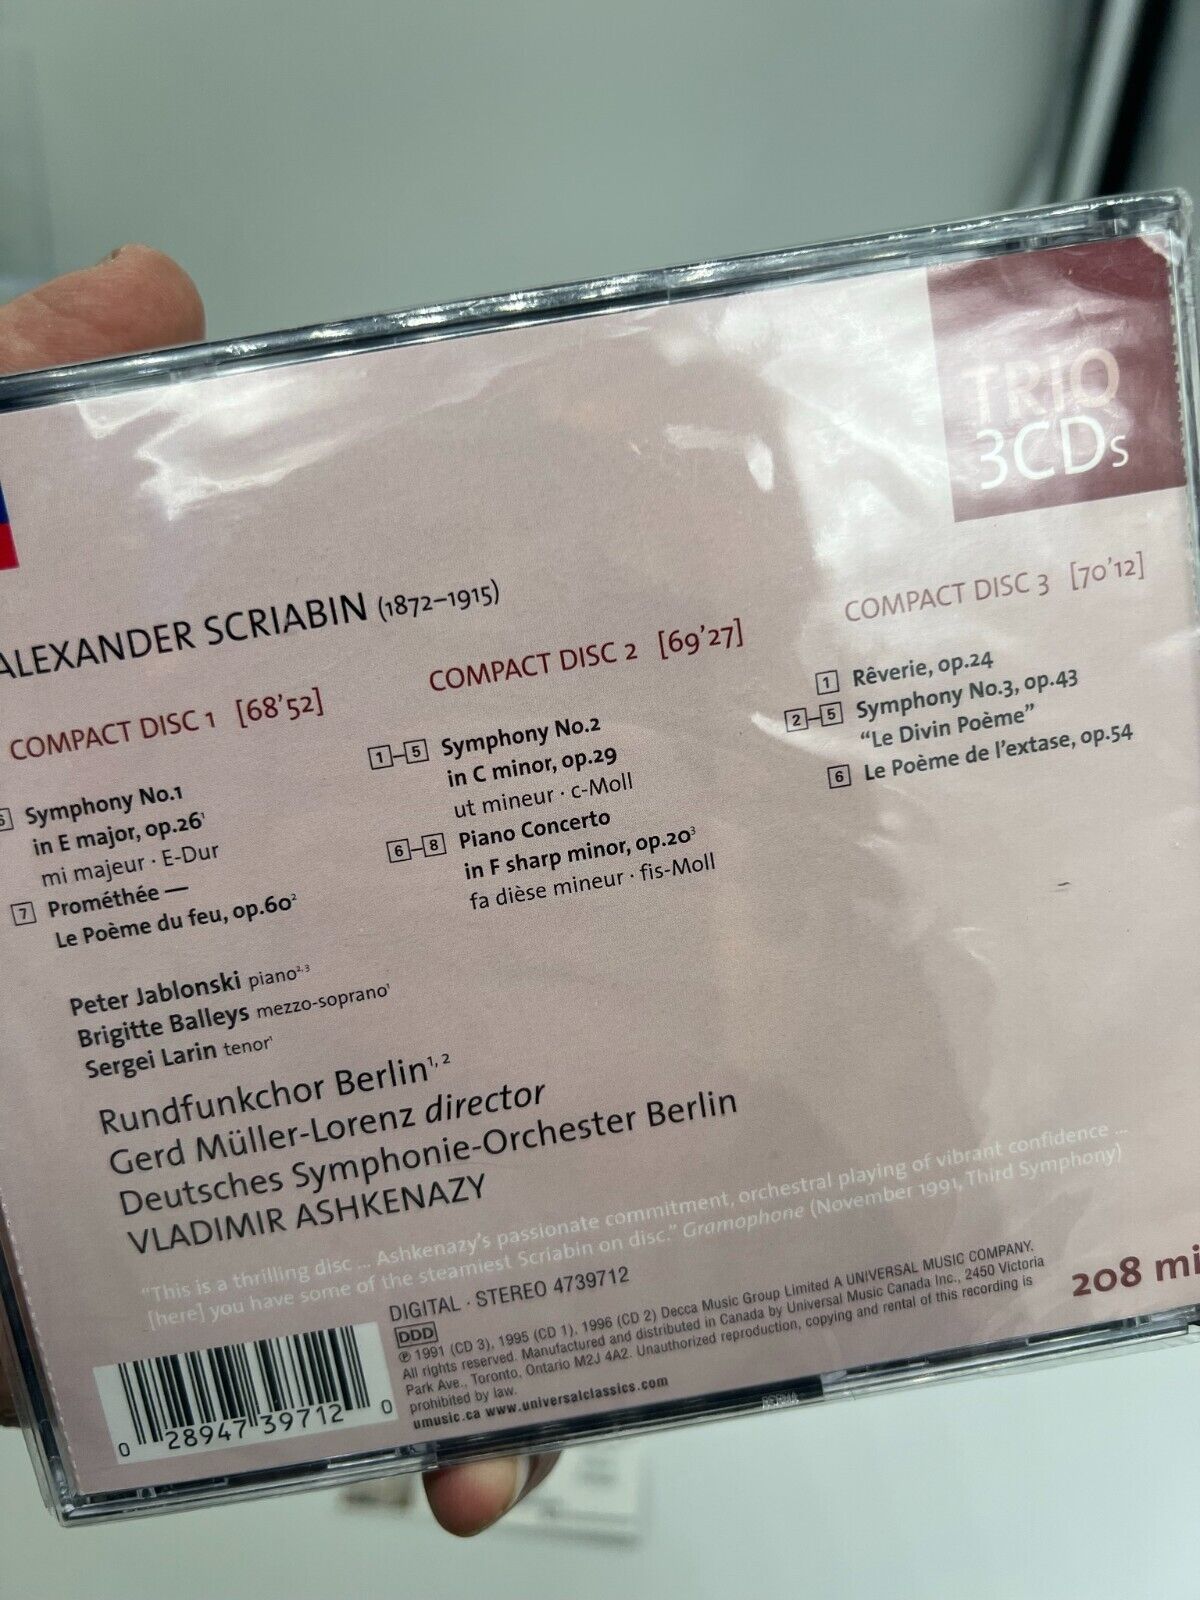 Sealed - Scriabin: Complete Symphonies 3CDs Jablonski - Ashkenazy